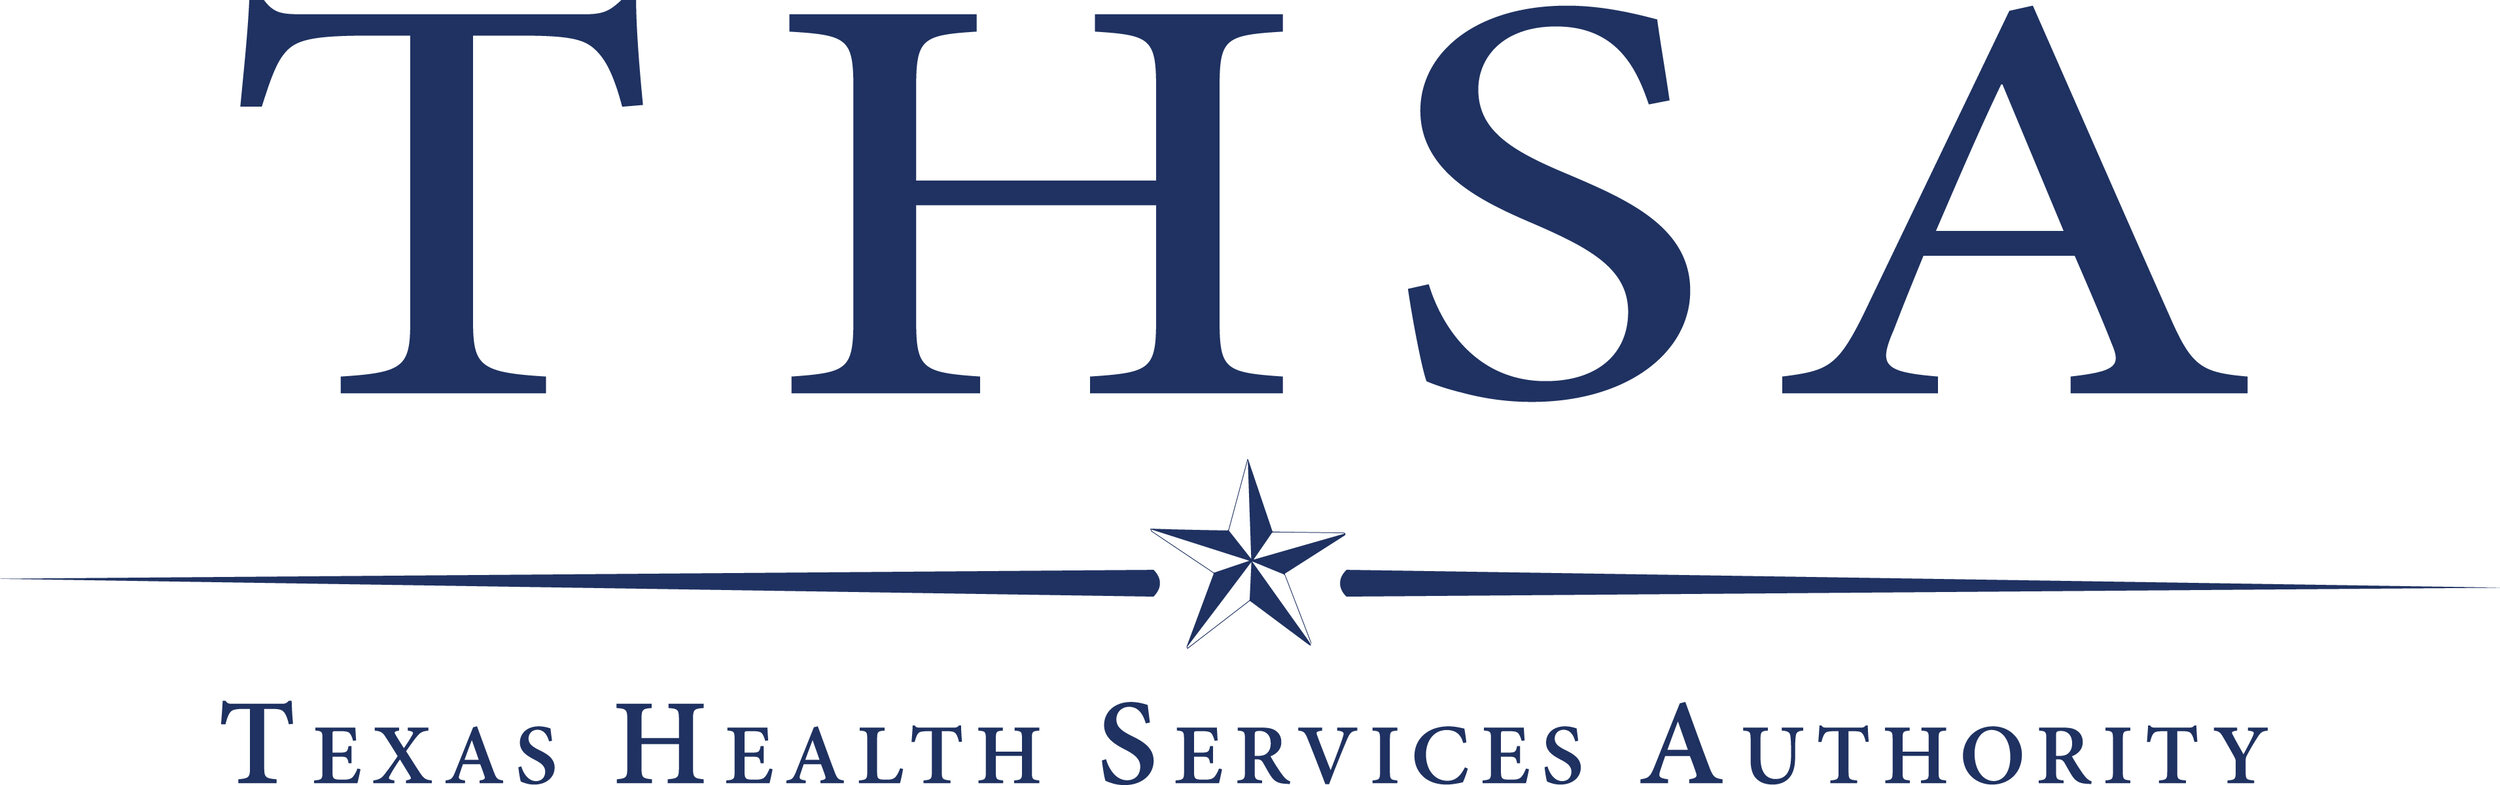 Texas Health Services Authority Logo